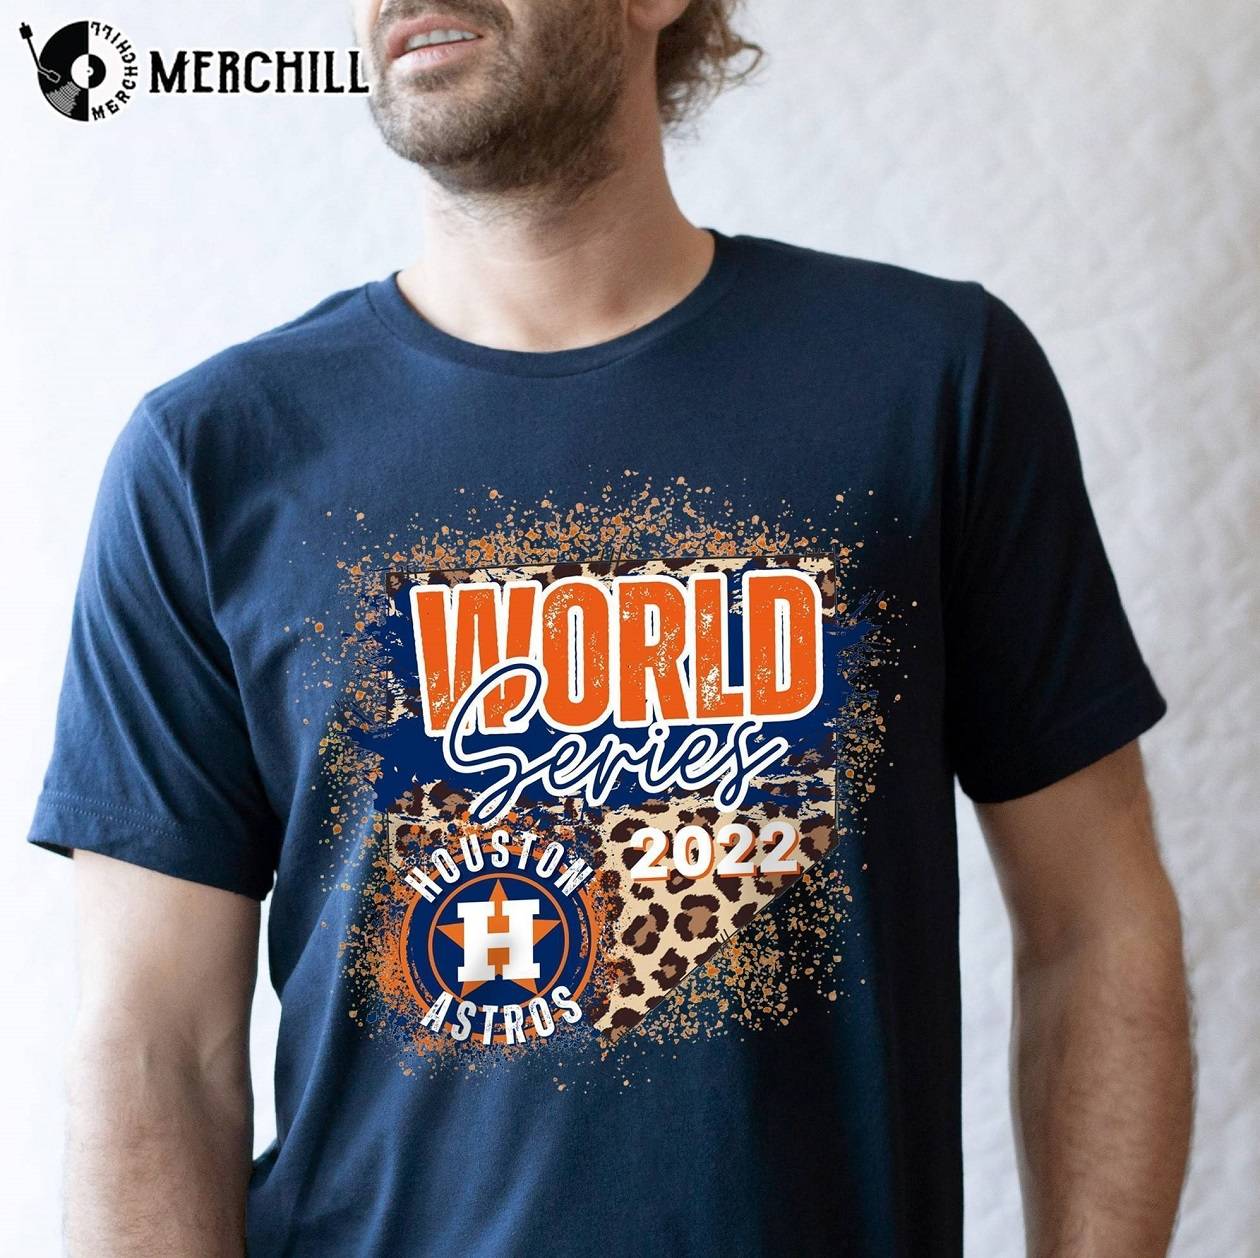 astros world series shirt